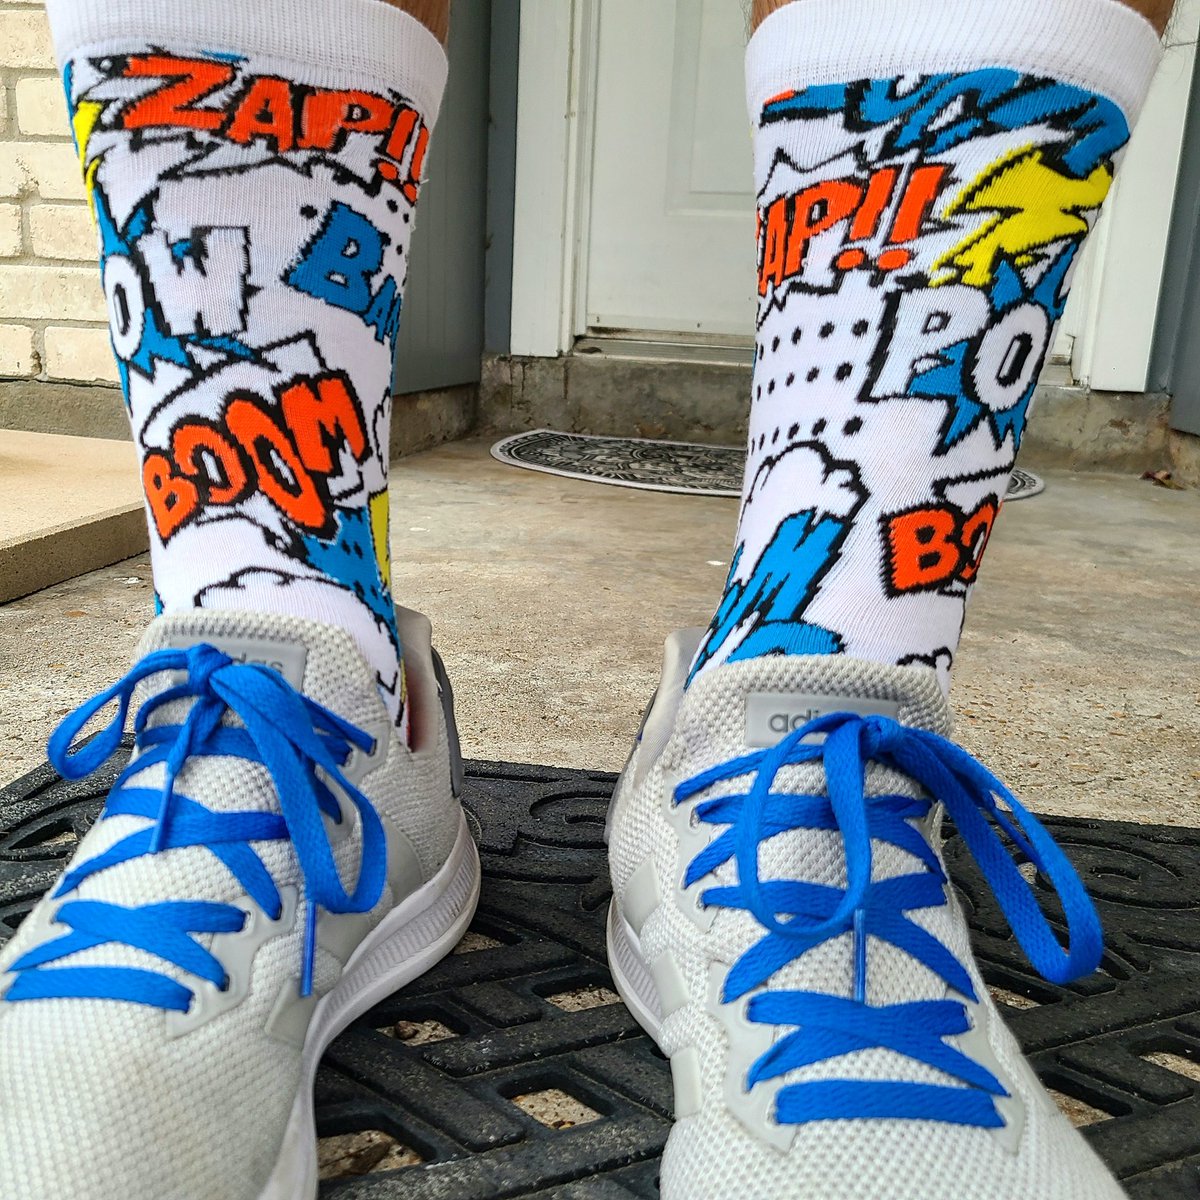 Cartoon socks & Adidas Lite Racer BYD 2.0 #cartoon #comicbook #lootcrate #lootwear #sharethewear @lootcrate @lootwear #popculture #socksofinstagram #ootd #shoesofinstagram #adidas @Adidas  #literacer #yesadidas #threestripes #threestripelife